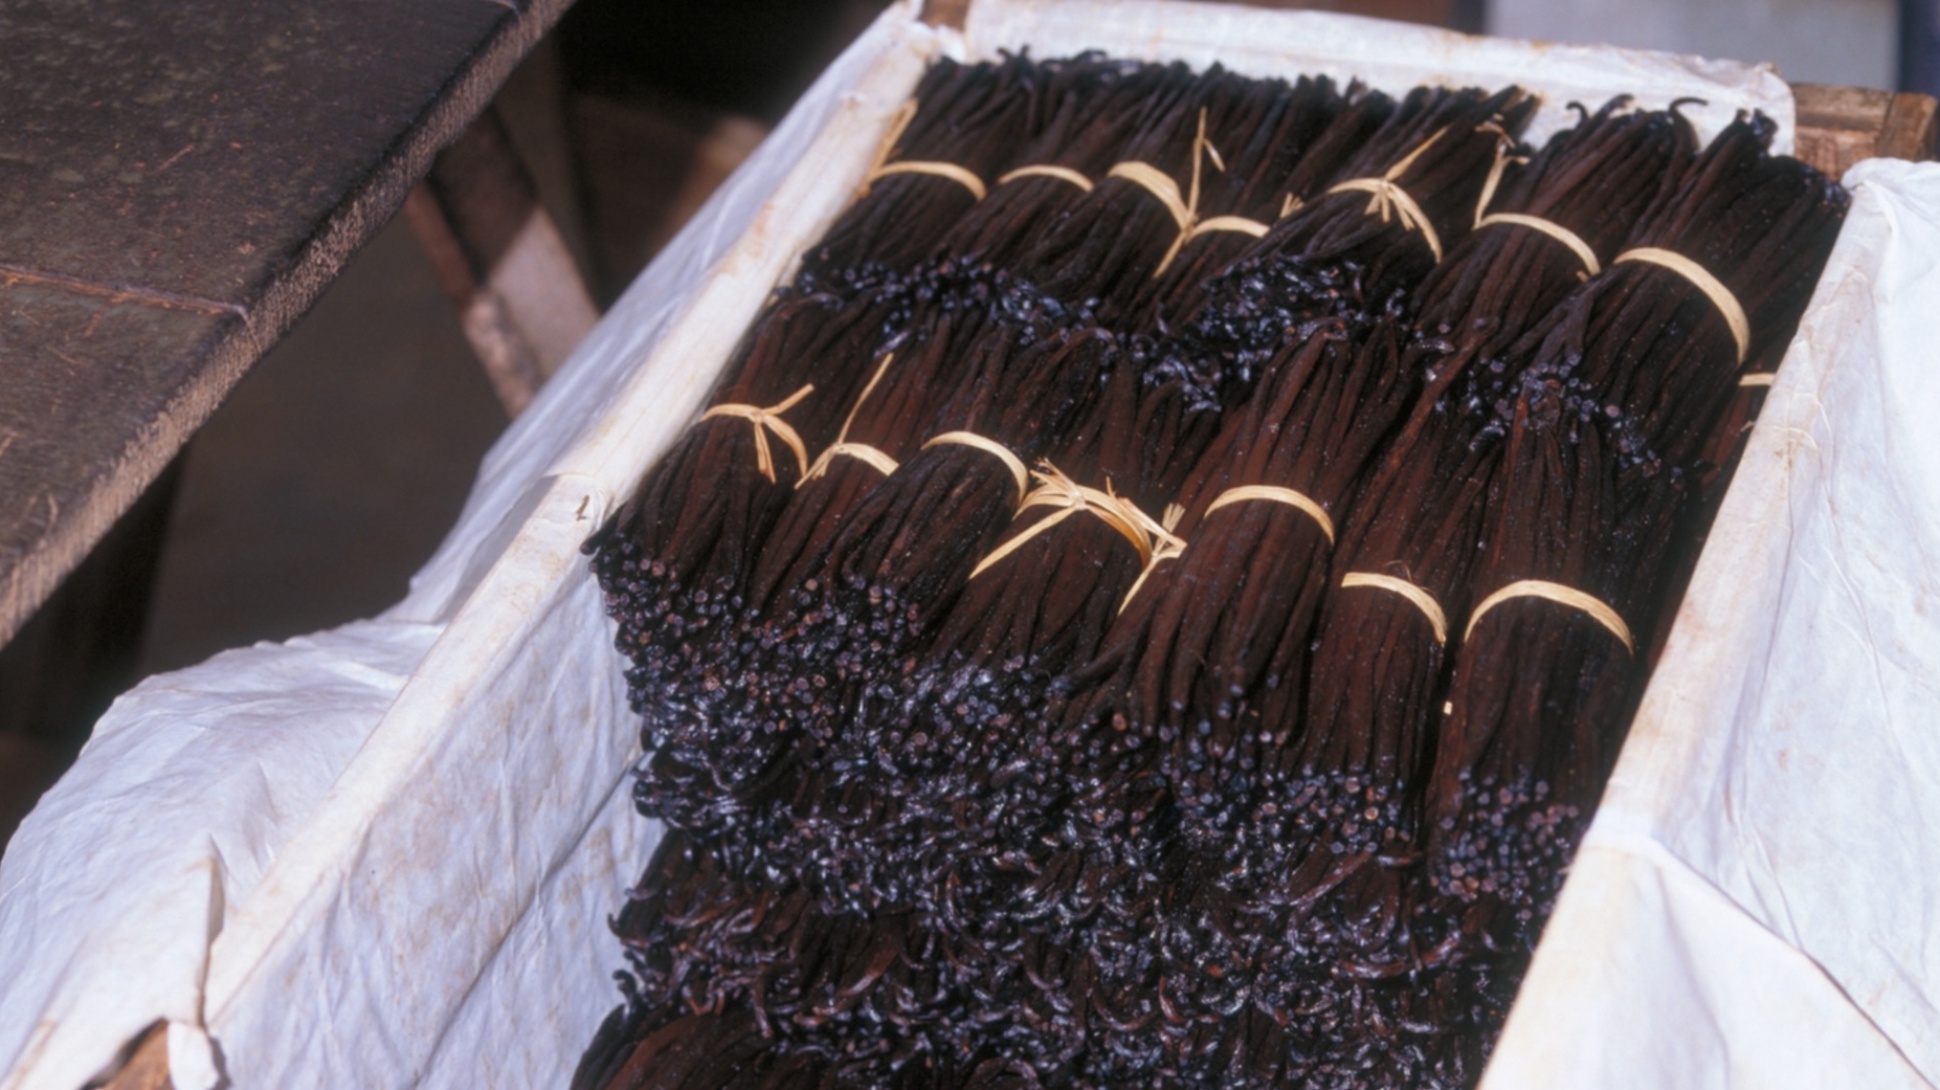 Several bundles of dark brown vanilla beans tied into bundles in a white box